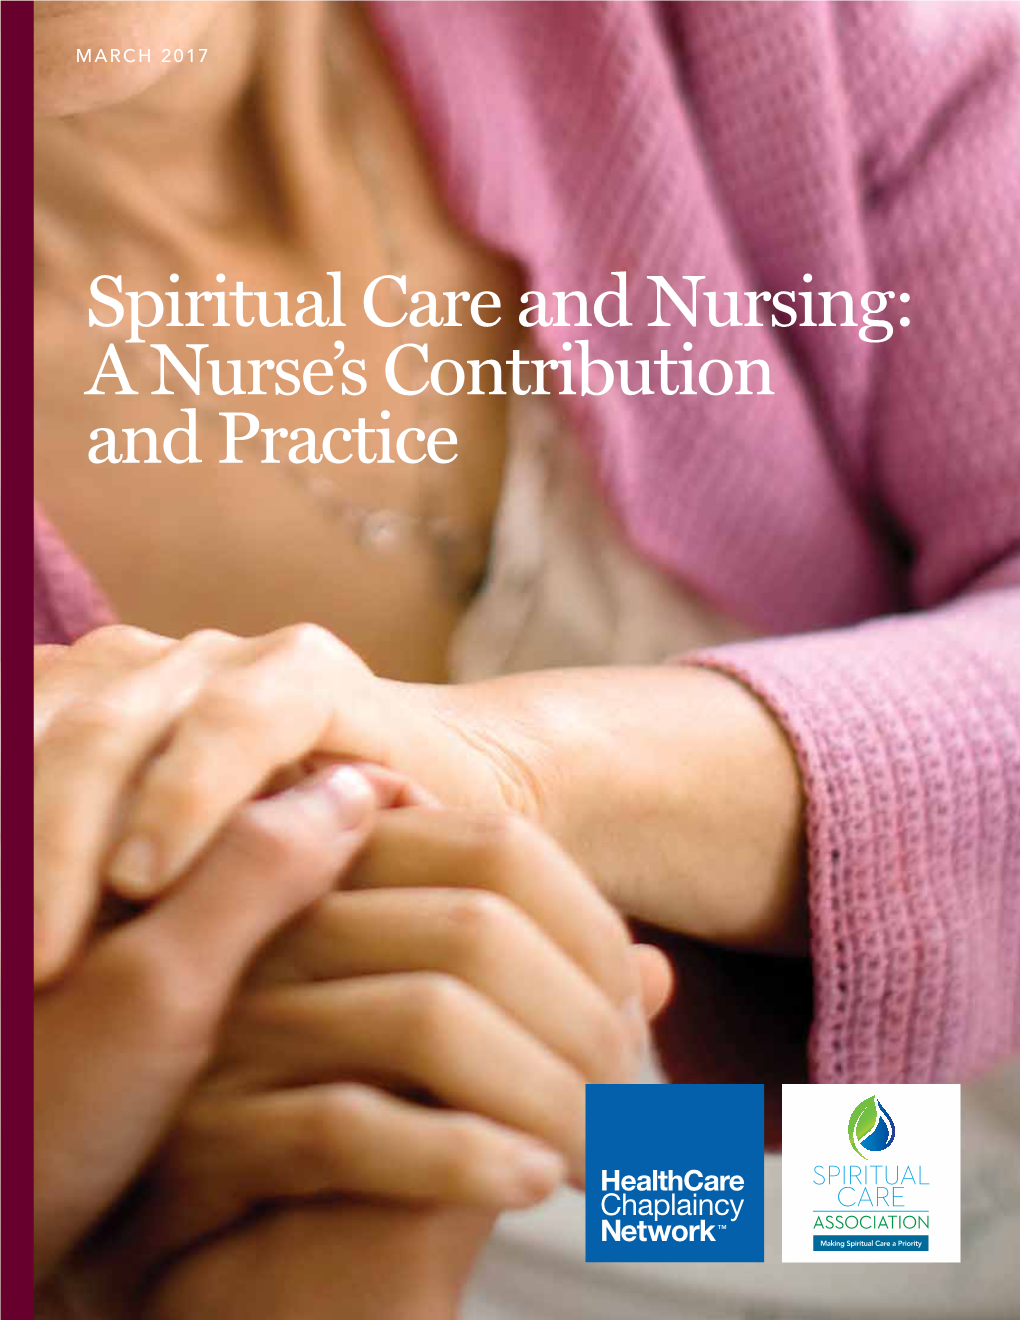 Spiritual Care and Nursing: a Nurse's Contribution and Practice